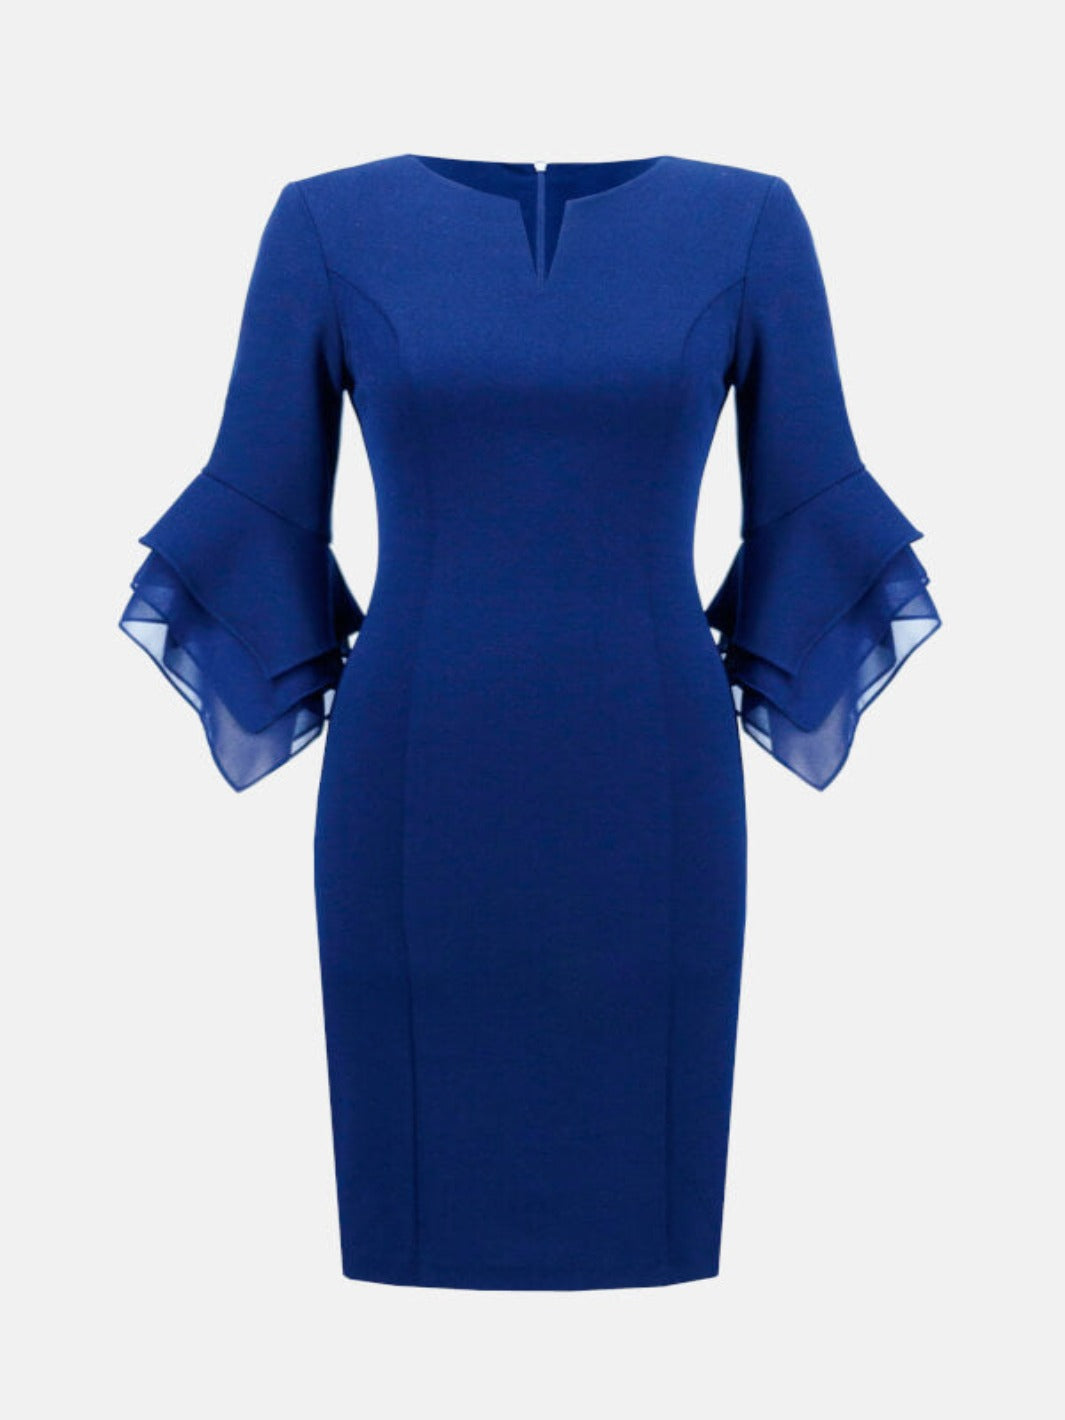 Joseph Ribkoff - Sheer Sleeve Dress In Royal Blue 233771-Nicola Ross